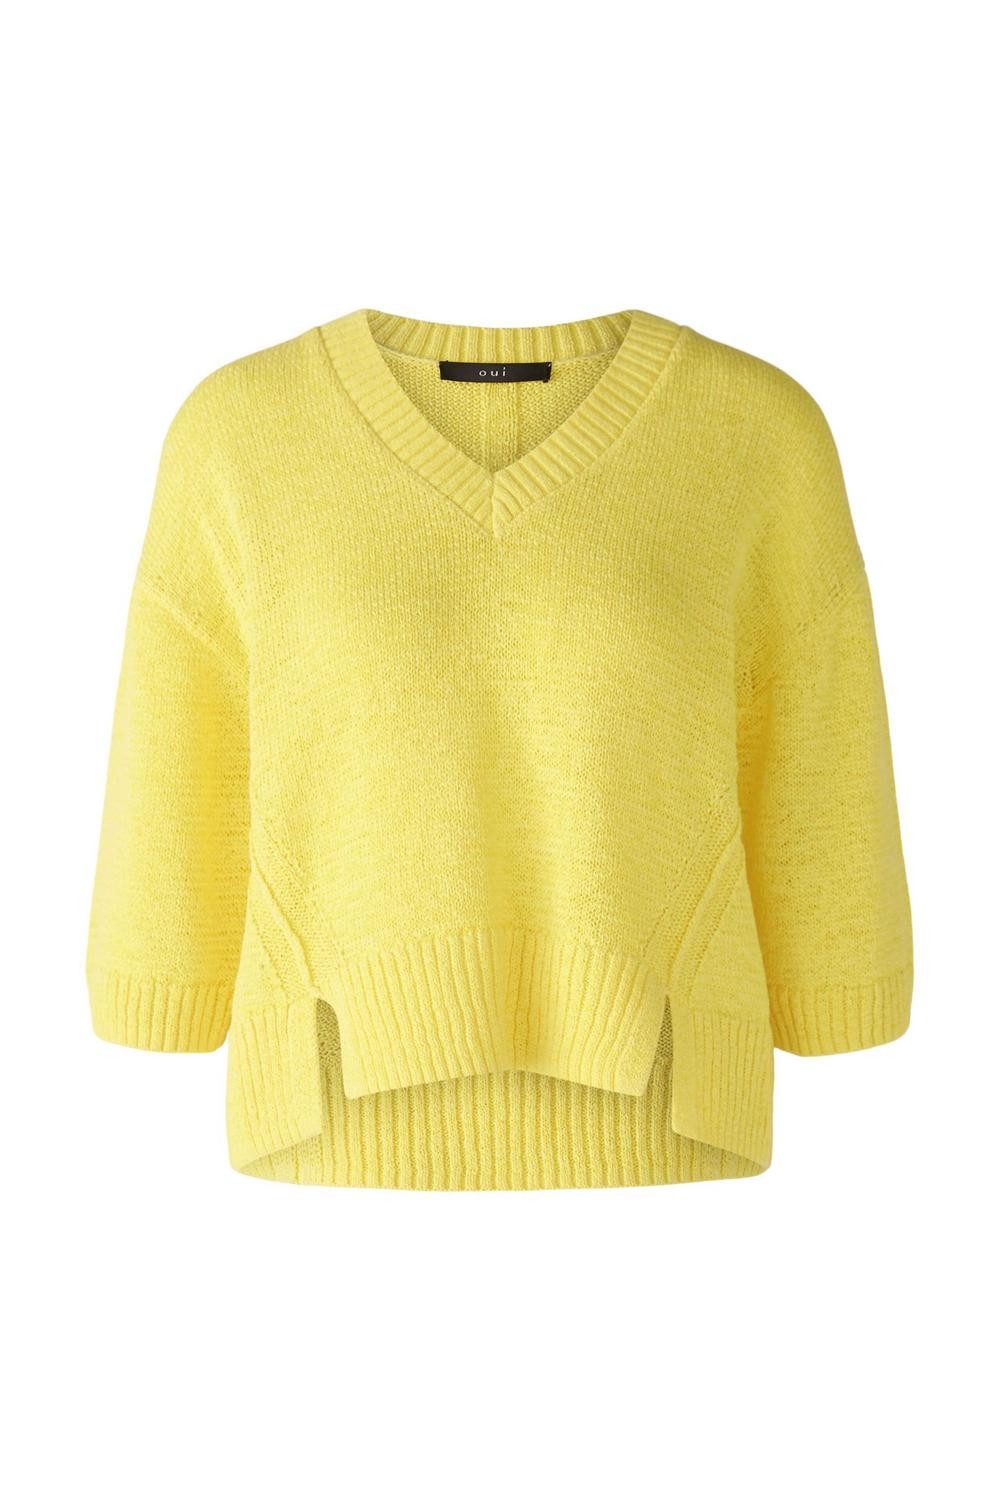 Oui Sweatshirt Pullover, yellow